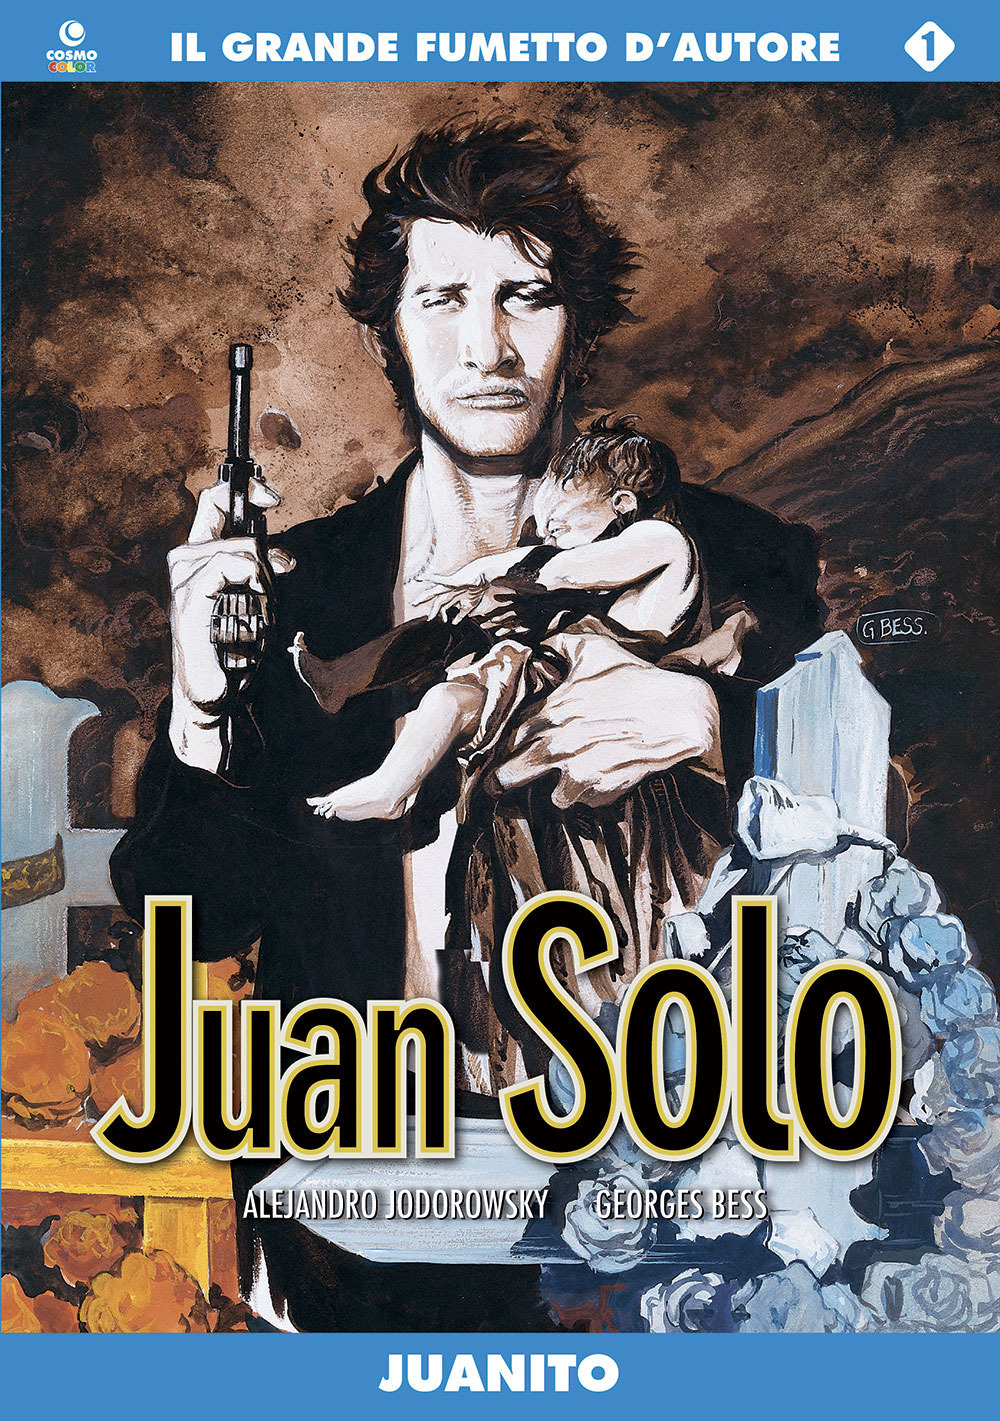 Juanito. Juan Solo. Vol. 1